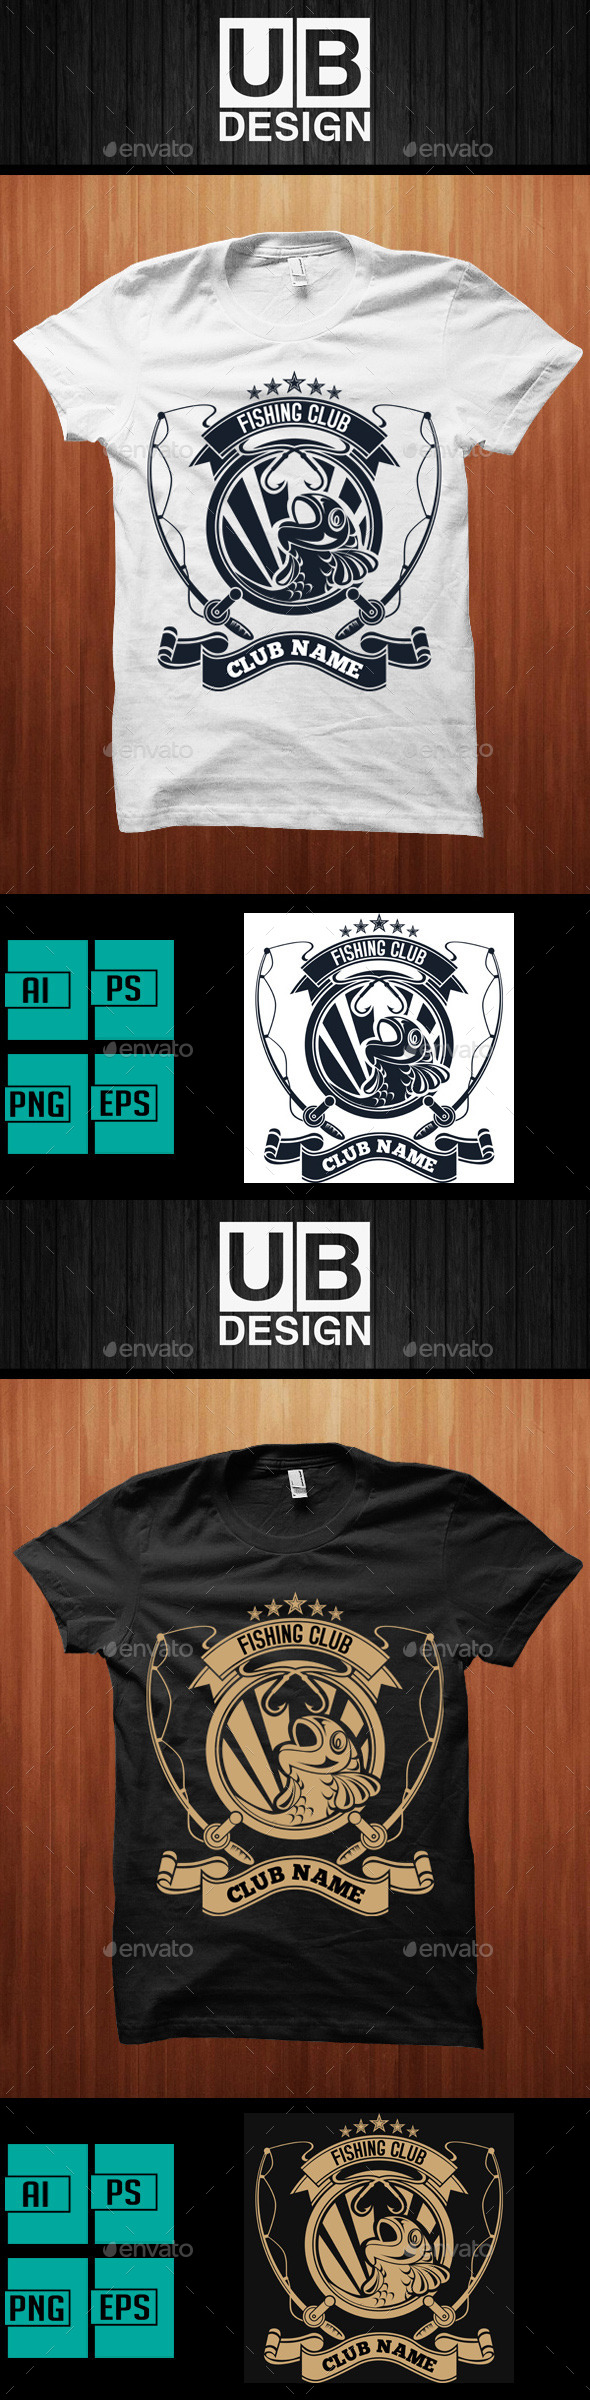 Shirt Templates Psd T-shirt Design for Fishing Club | Download T-Shirt ...